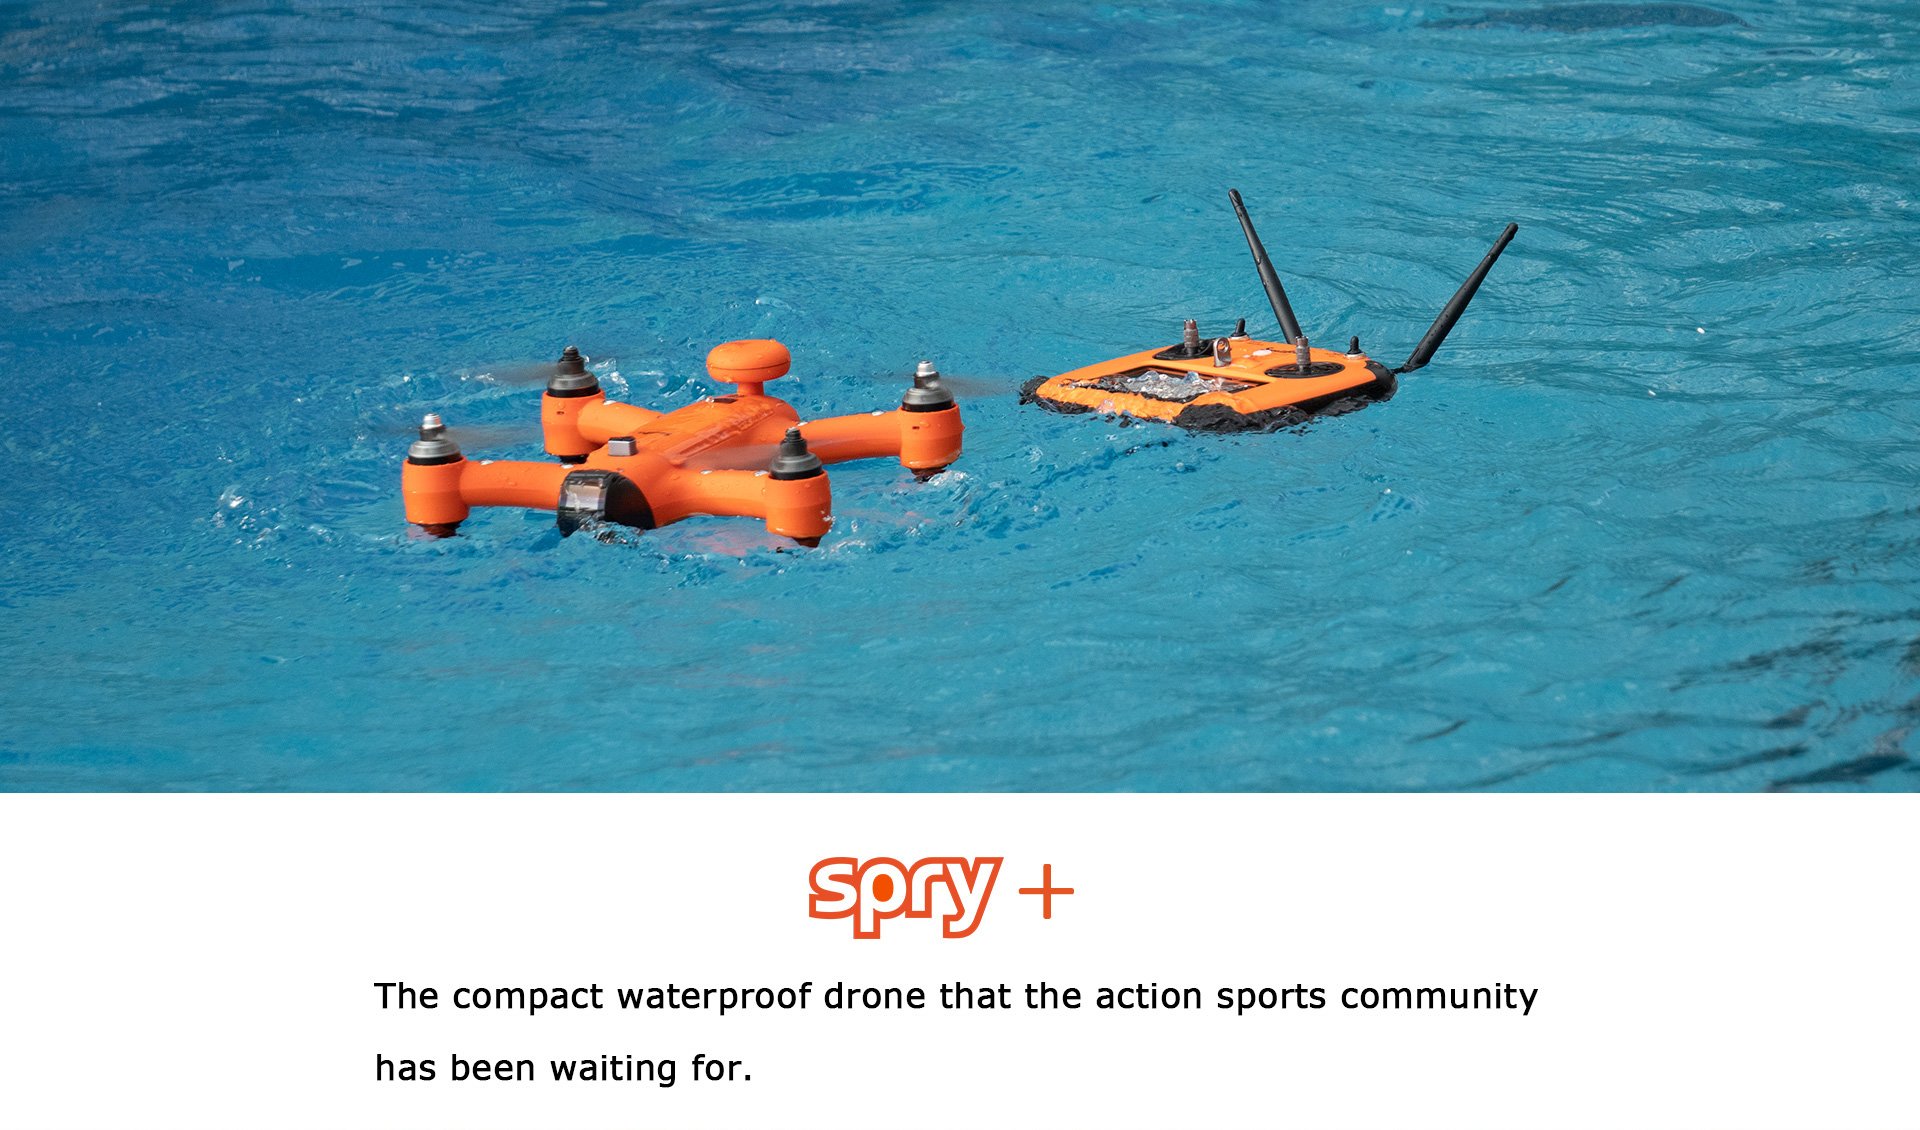 SwellPro-Spry-58G-WIFI-FPV-GPS-with-4K-HD-Camera-Servo-Gimbal-Wateproof-RC-Underwater-Drone-Quadcopt-1890881-1